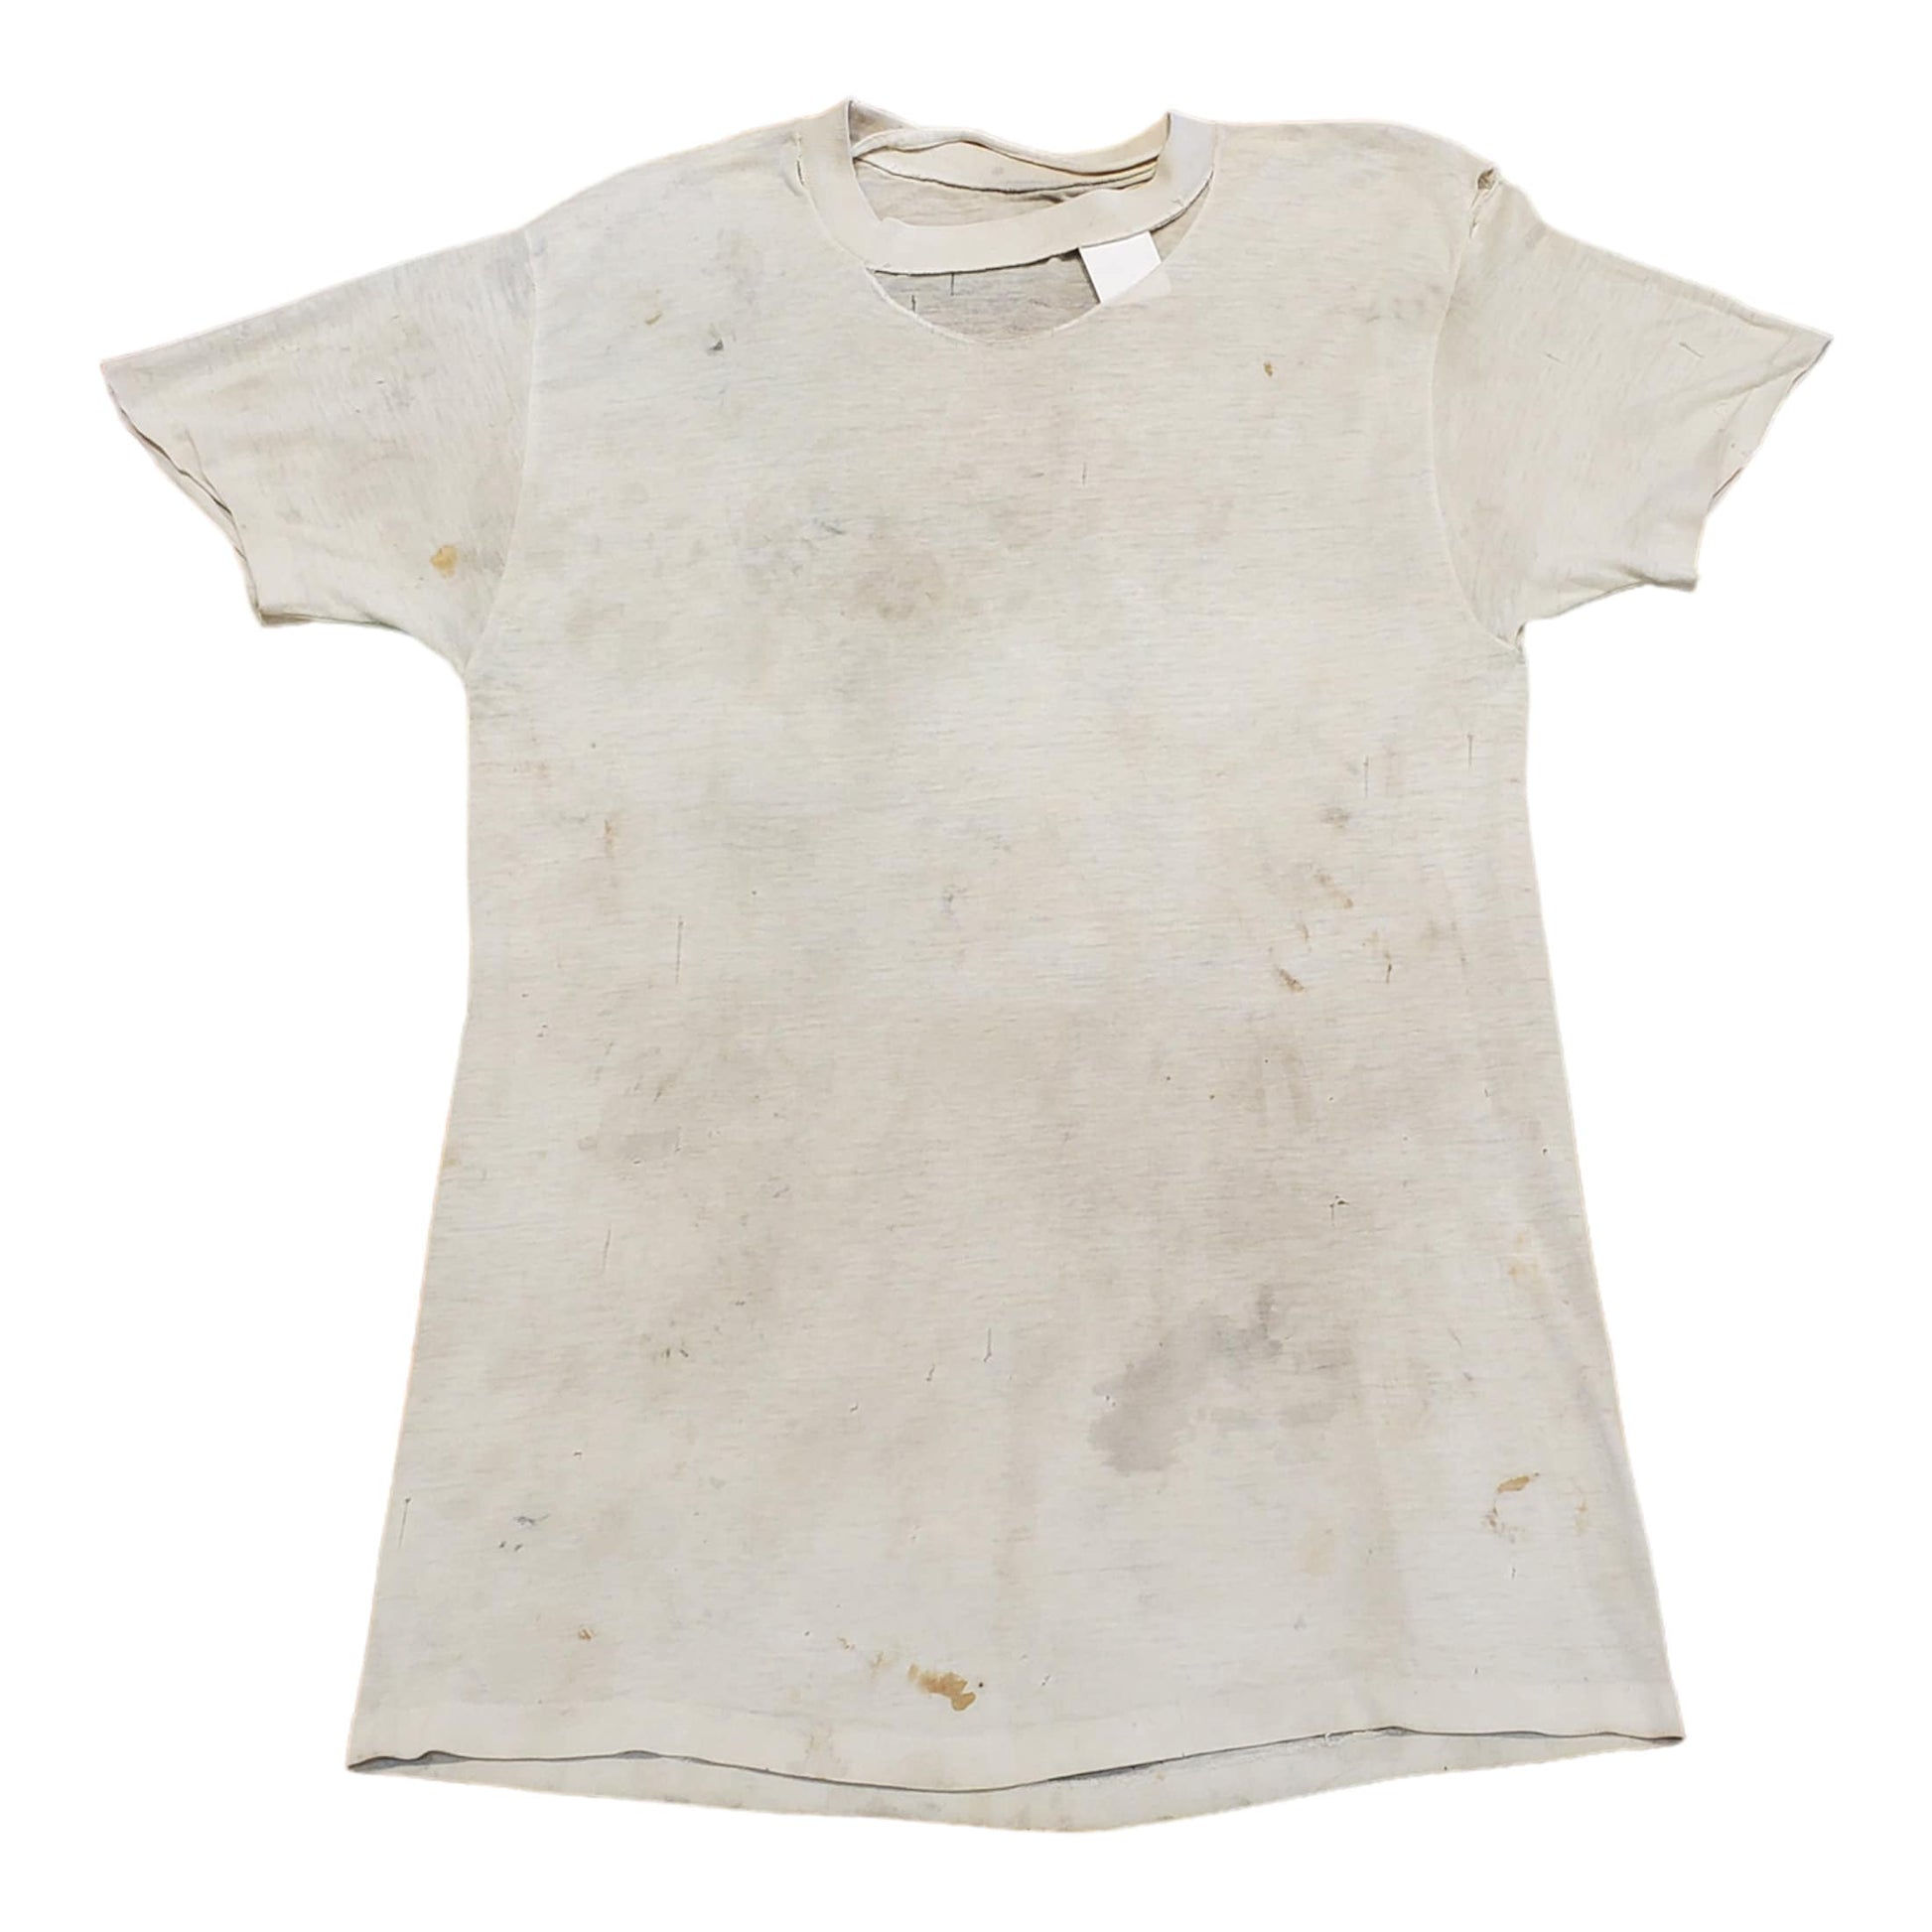 1980s Thrashed Threadbare Blank White T-Shirt Size S